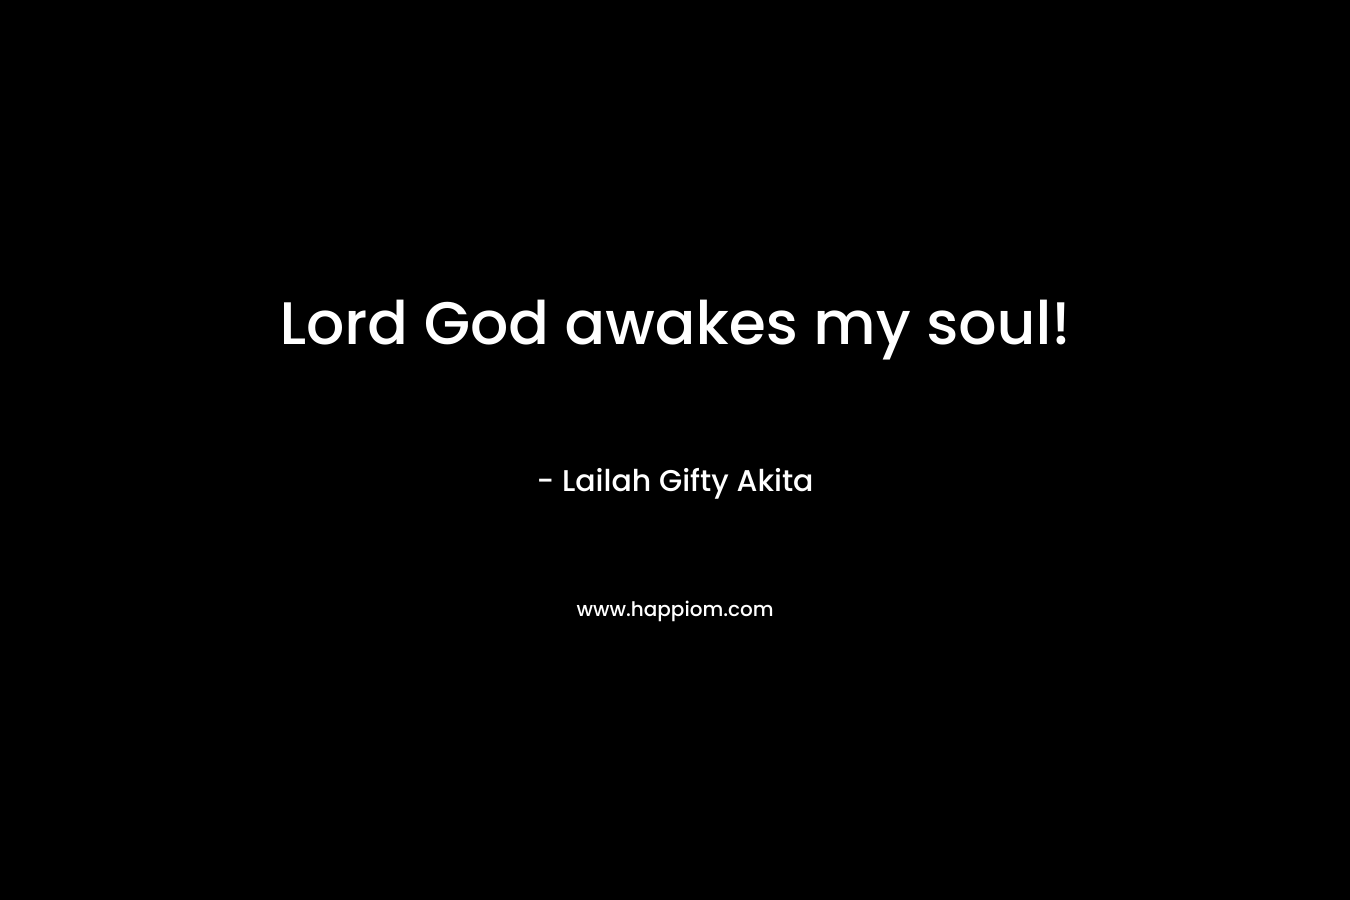 Lord God awakes my soul!